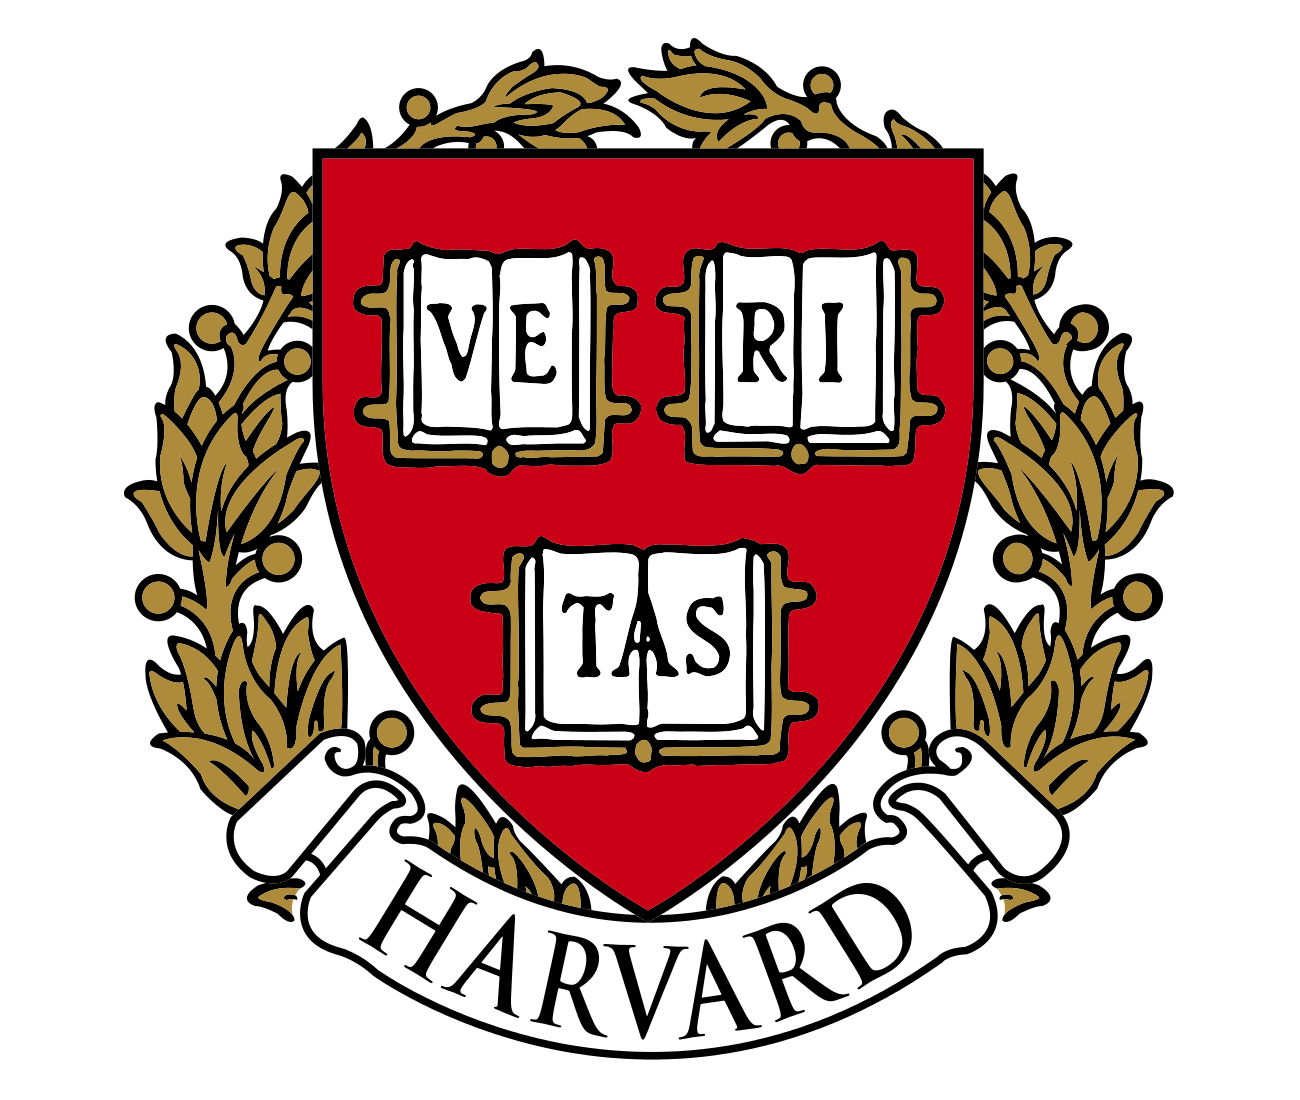 Harvard logo - Ivy League